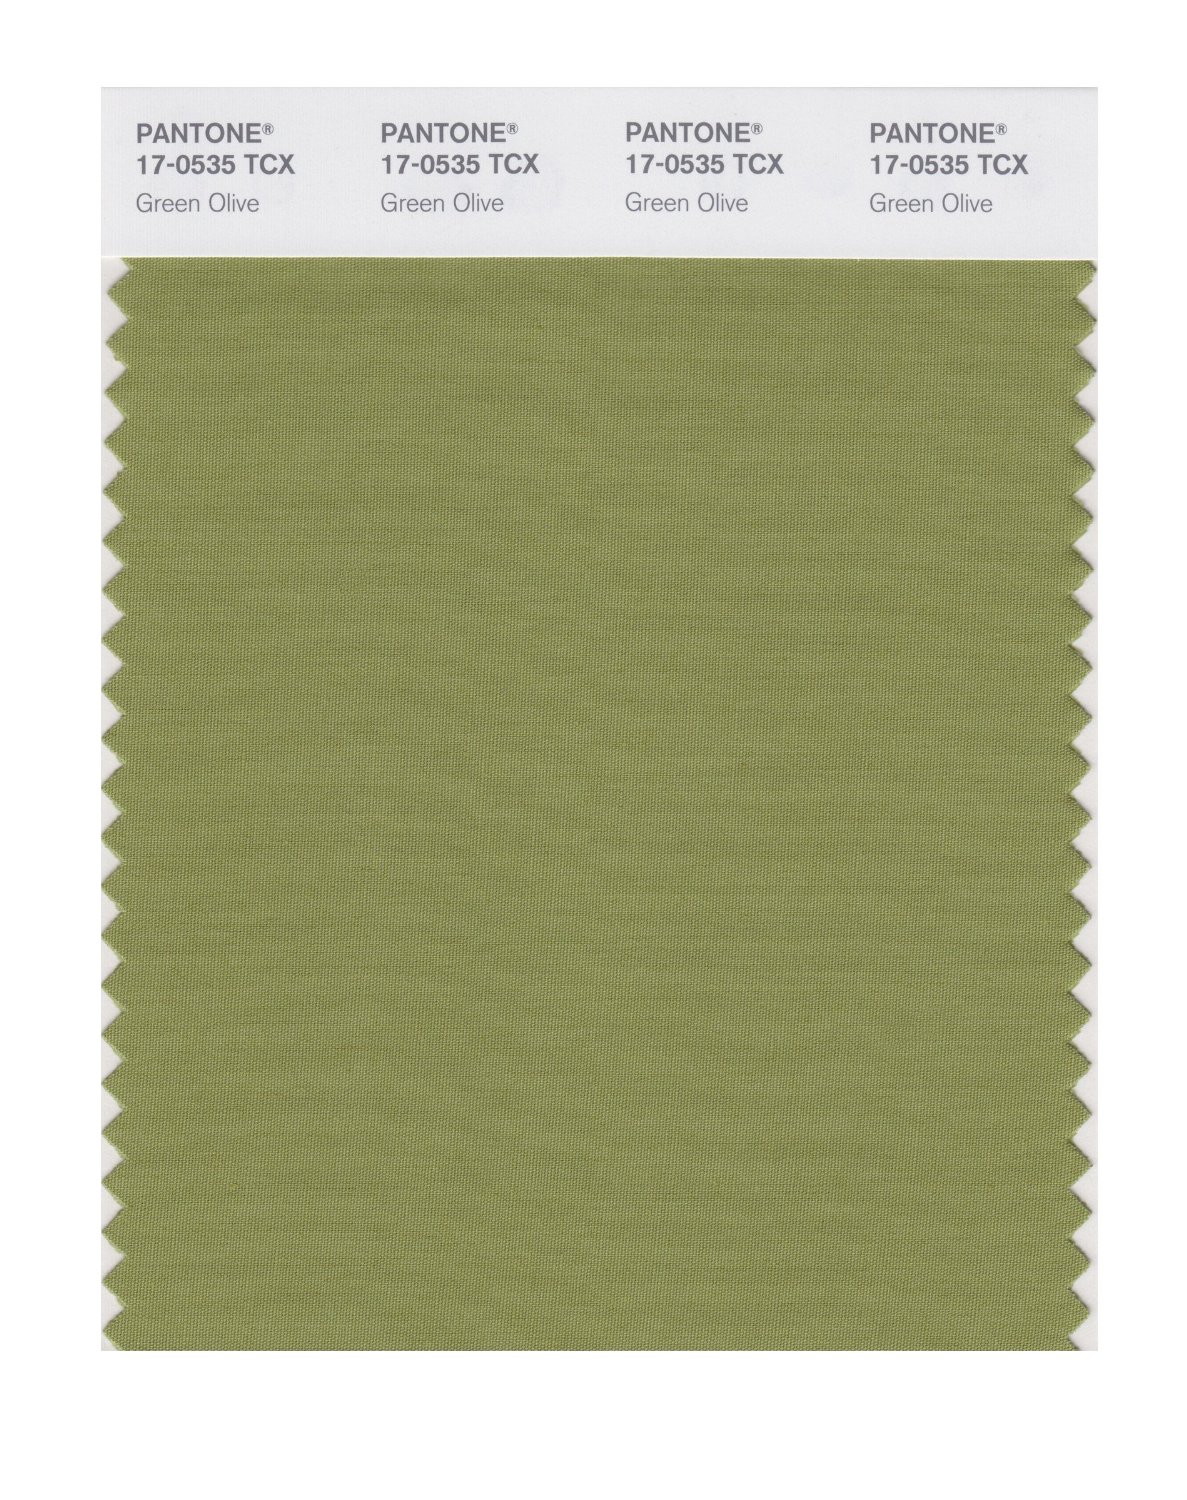 Pantone Cotton Swatch 17-0535 Green Olive